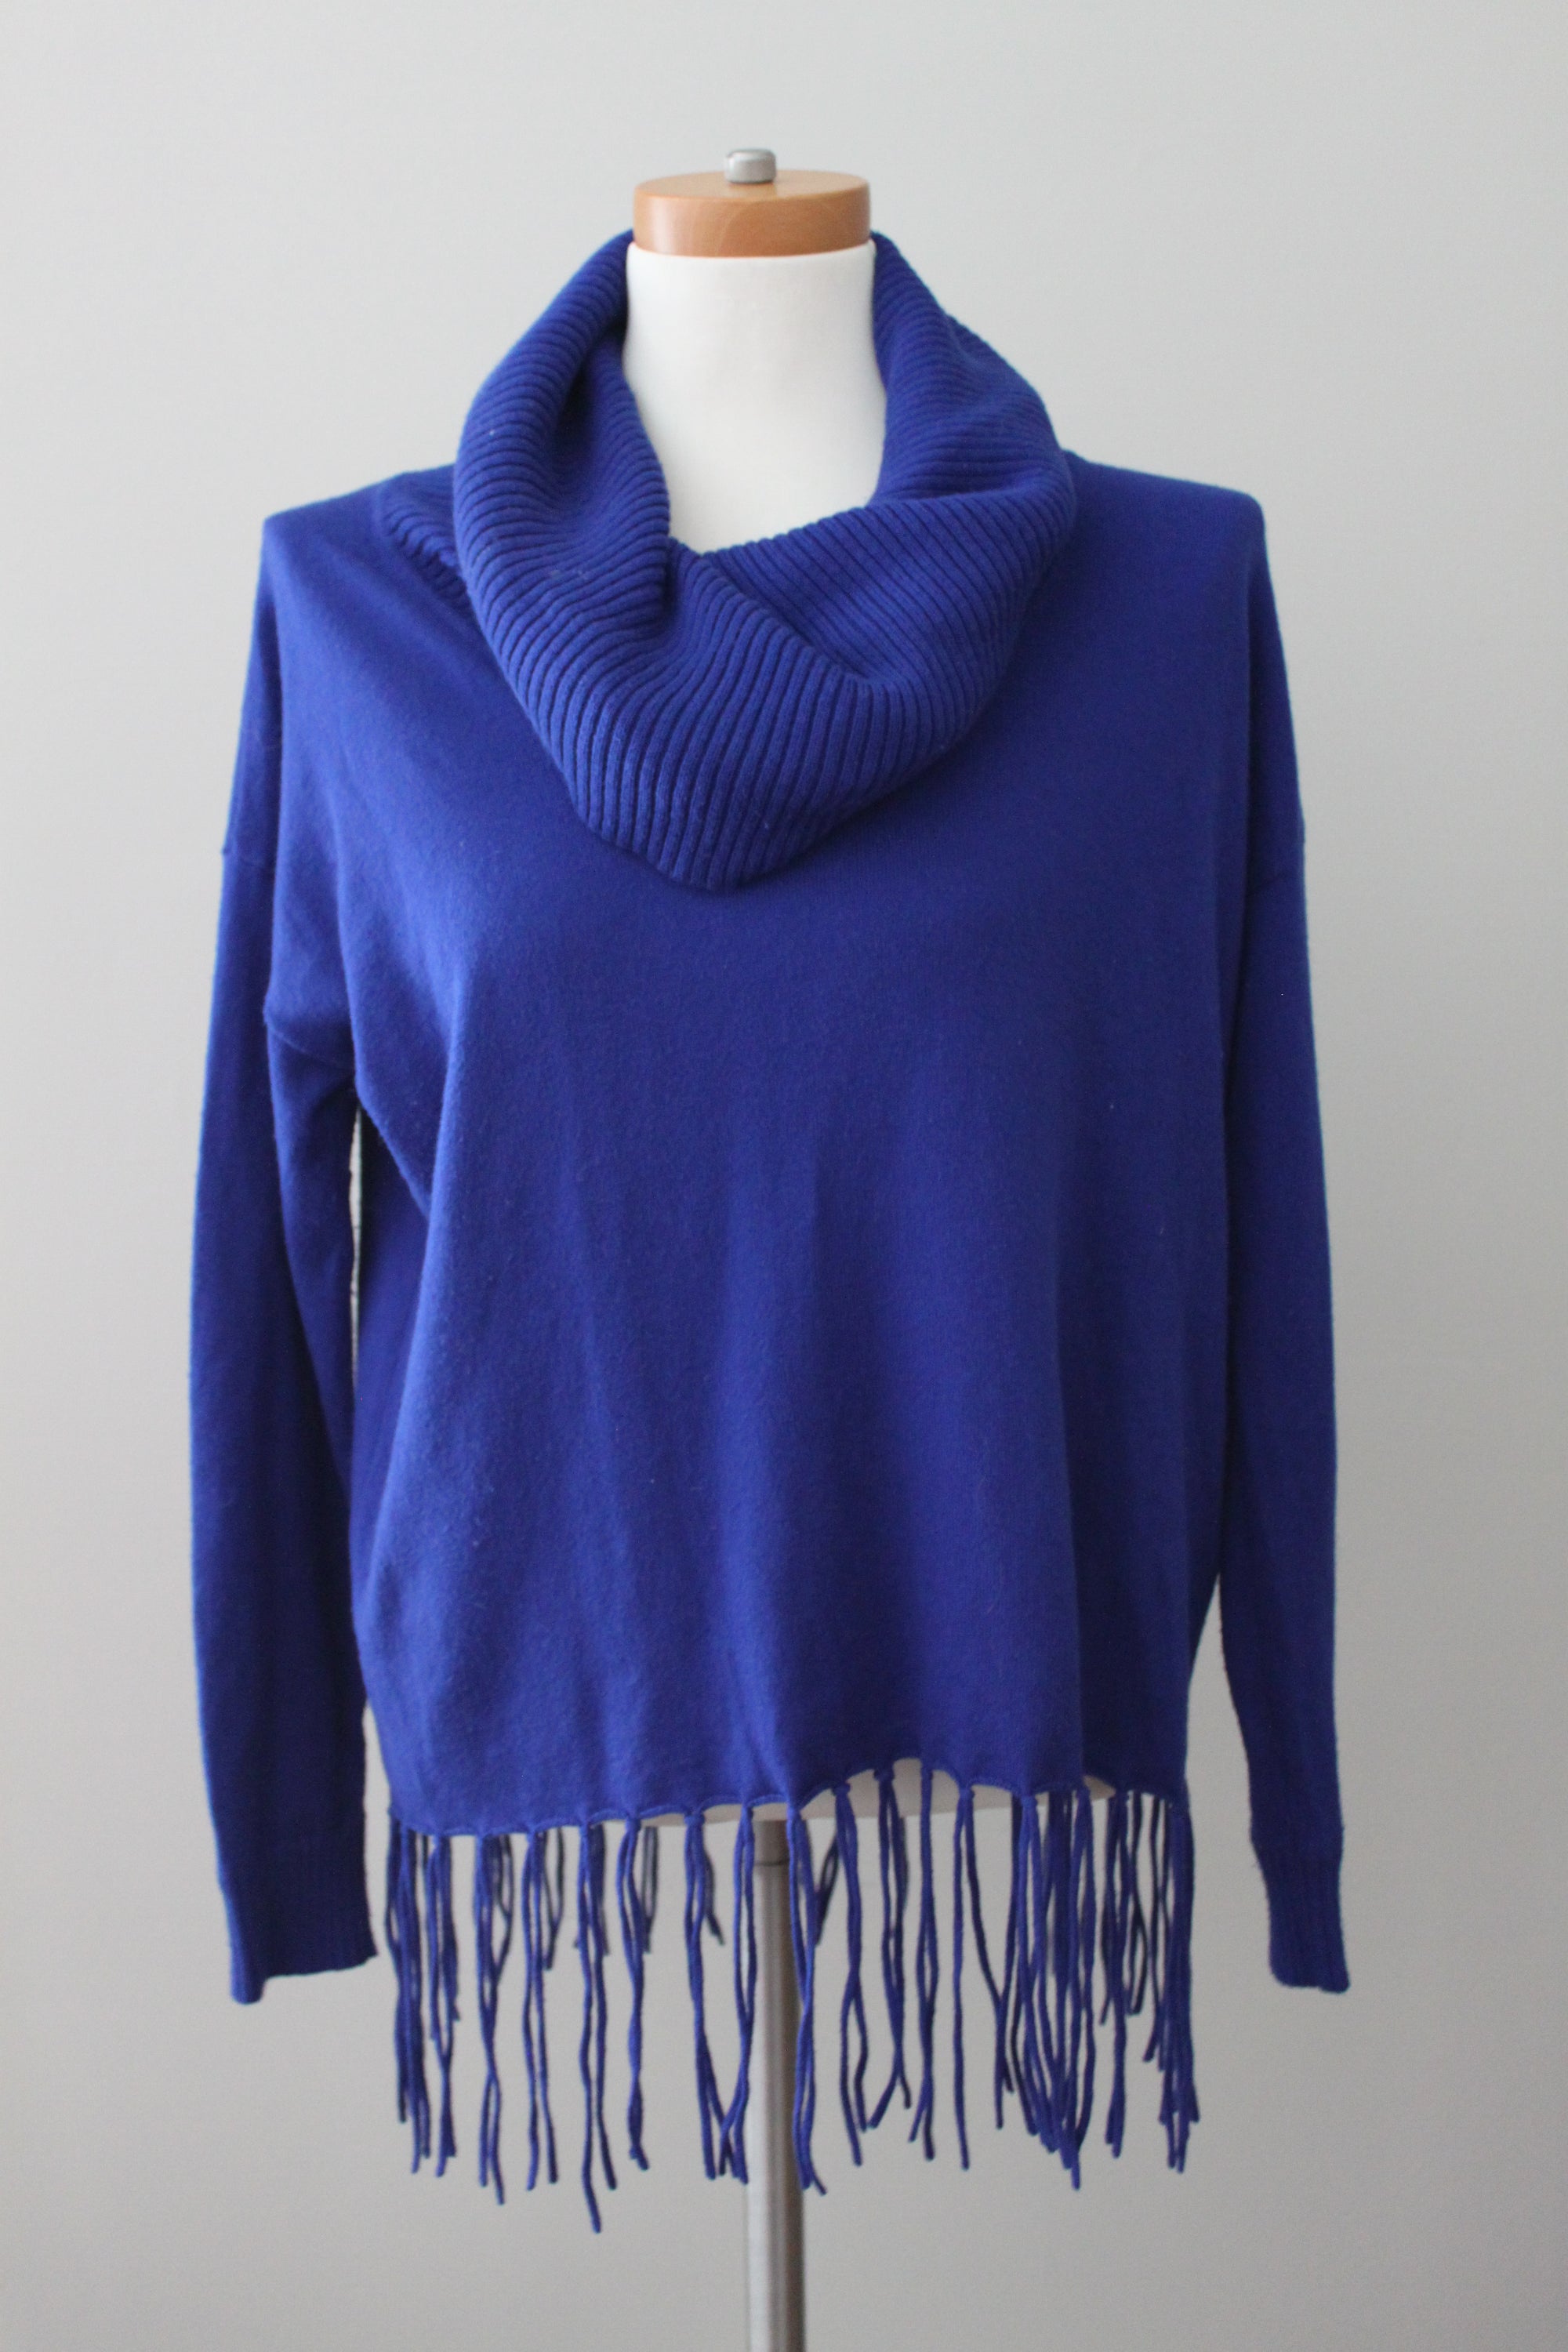 MICHAEL KORS﻿ Bright Winter blue fringe sweater